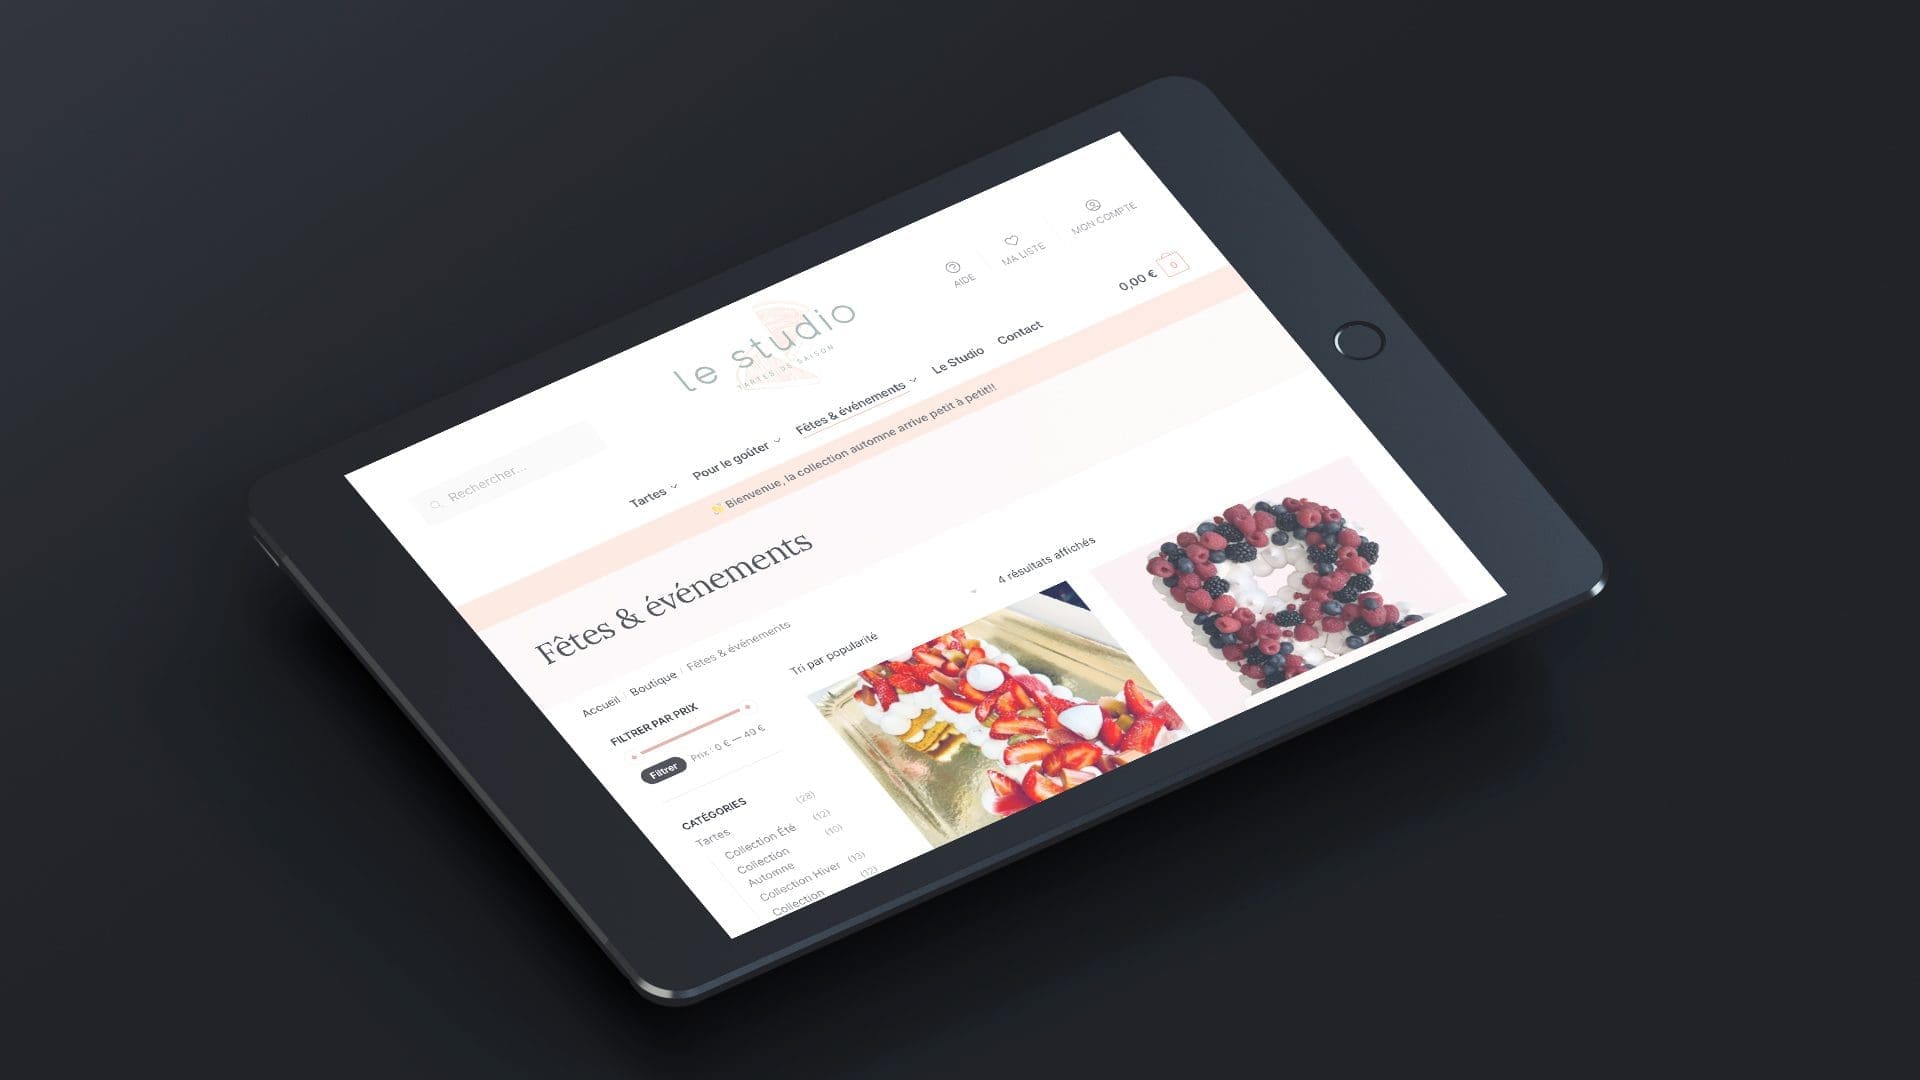 Projet Site e commerce Le Studio Patisserie iPad